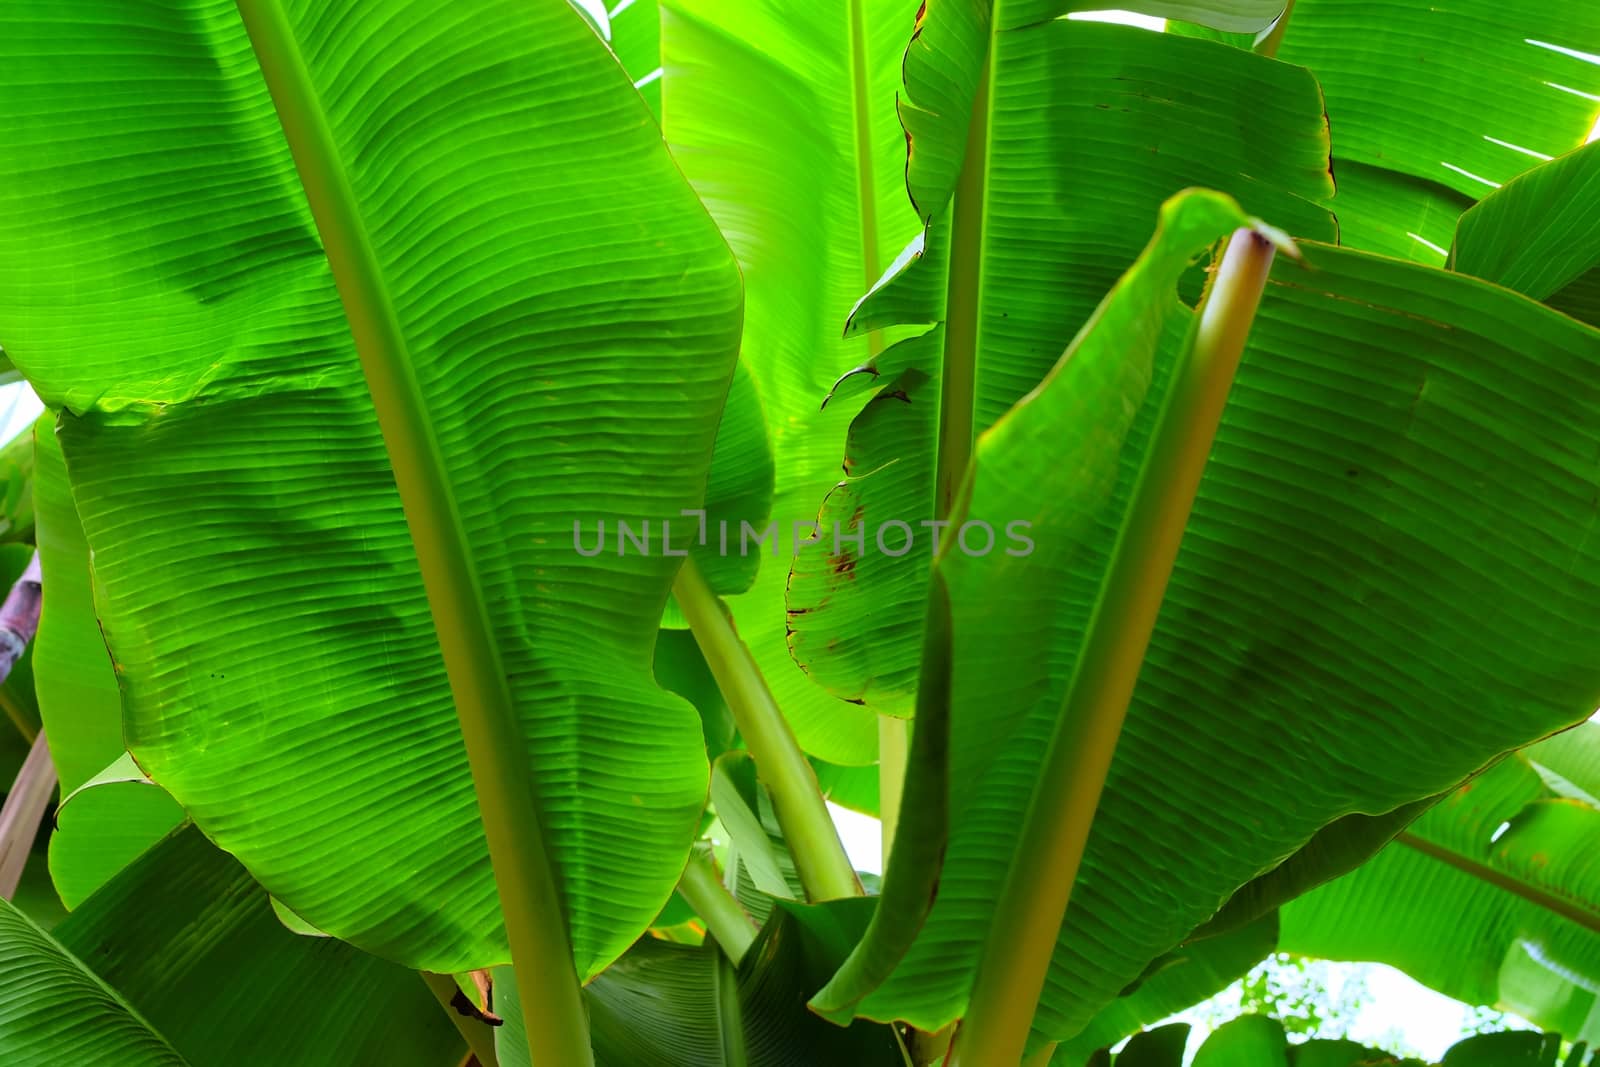 Bottom View of Banana Leaves. (Selective Focus) by mesamong